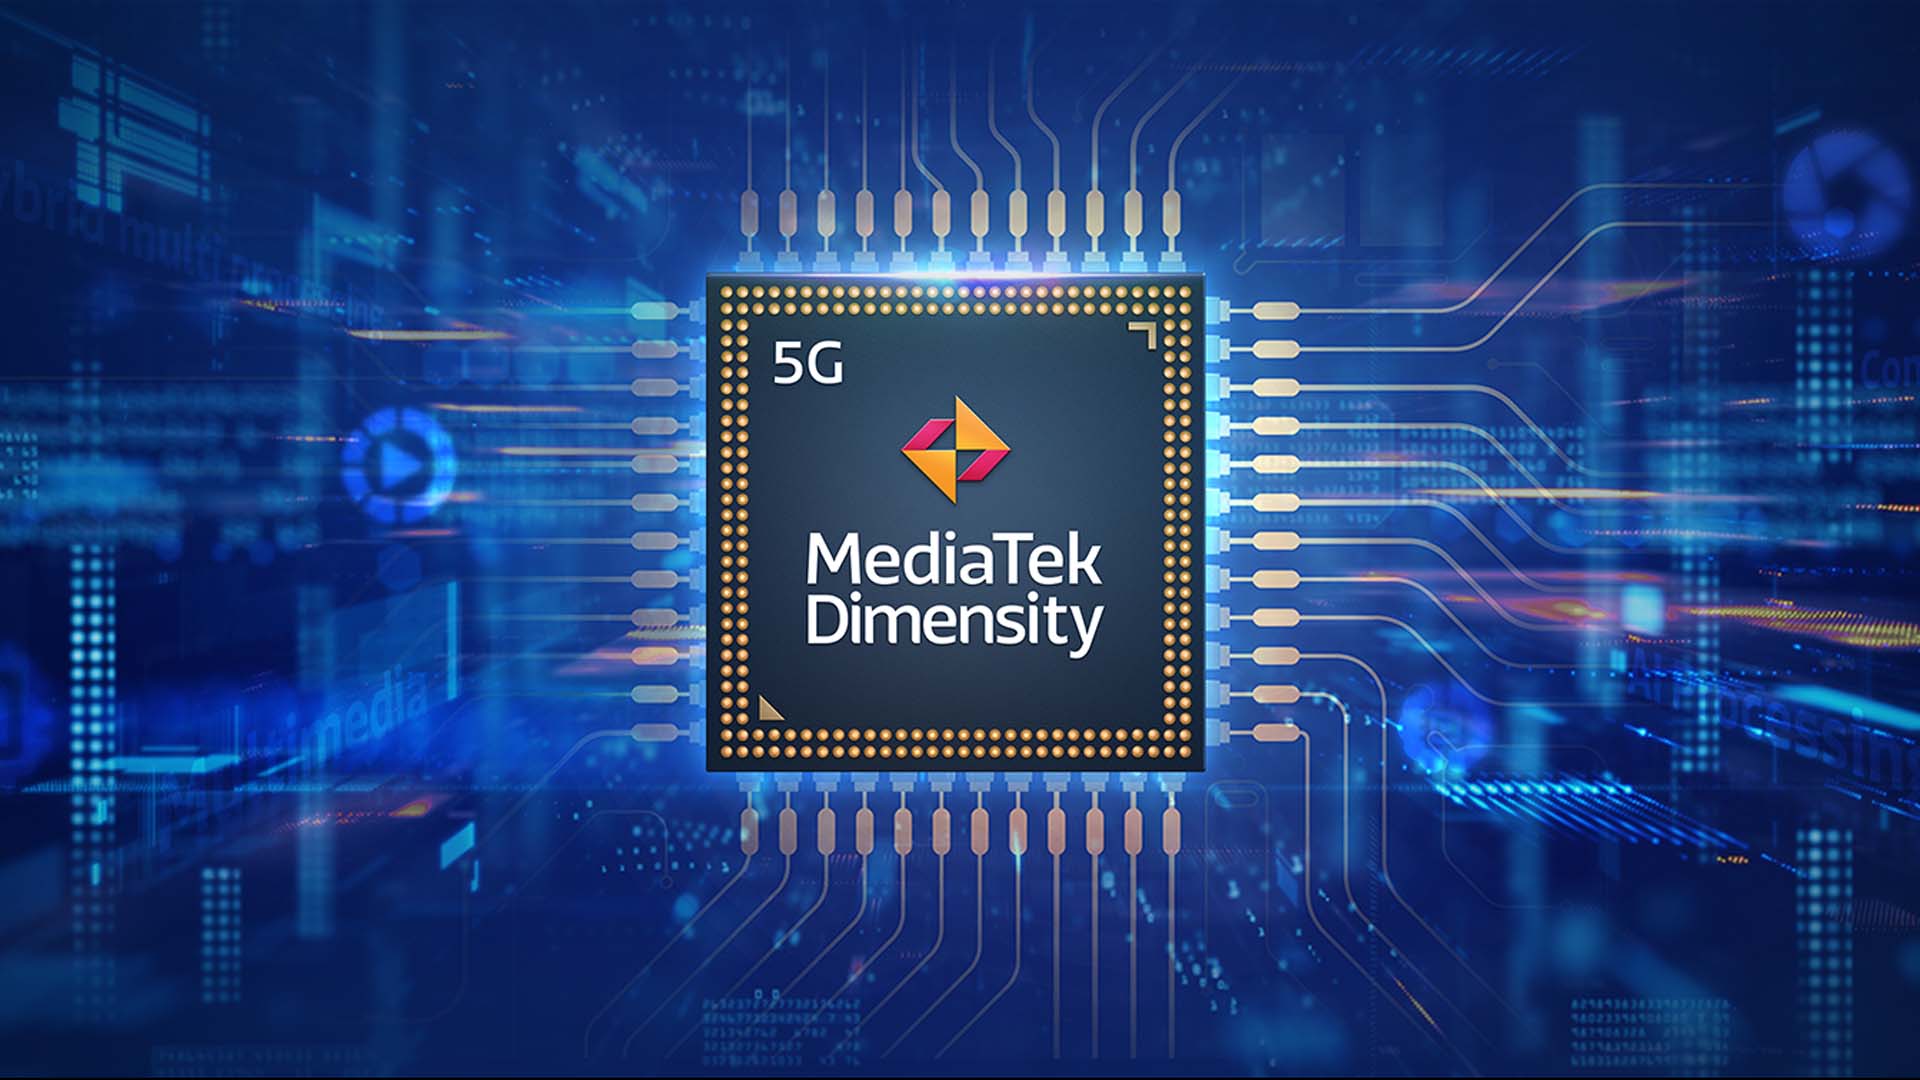 mediatek-s-dimensity-1080-chipset-brings-200mp-camera-support-to-budget-phones